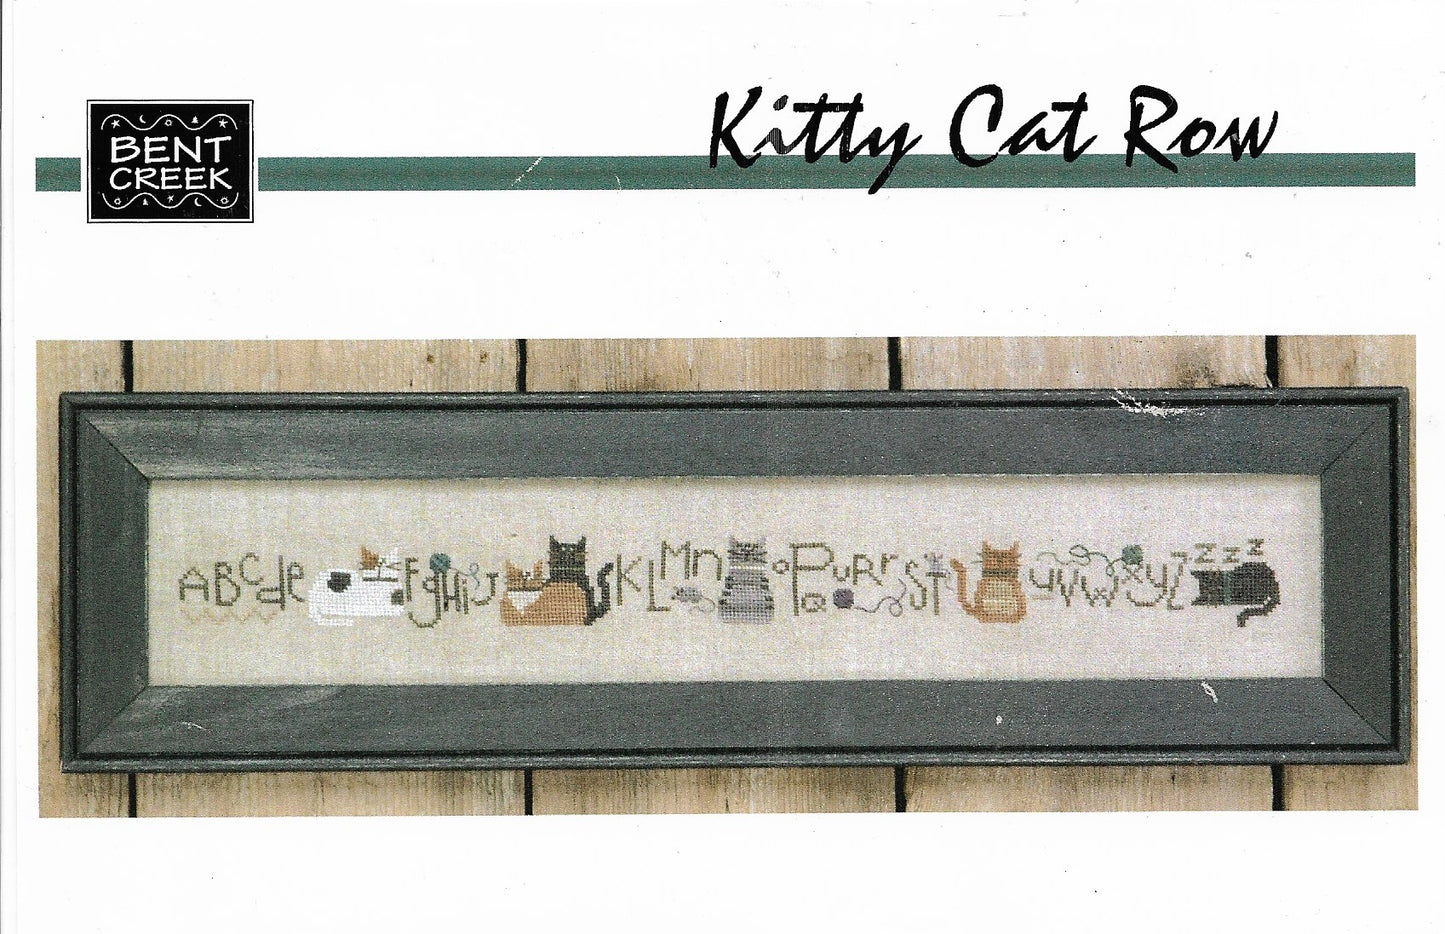 Bent Creek Kitty Cat Row cross stitch pattern